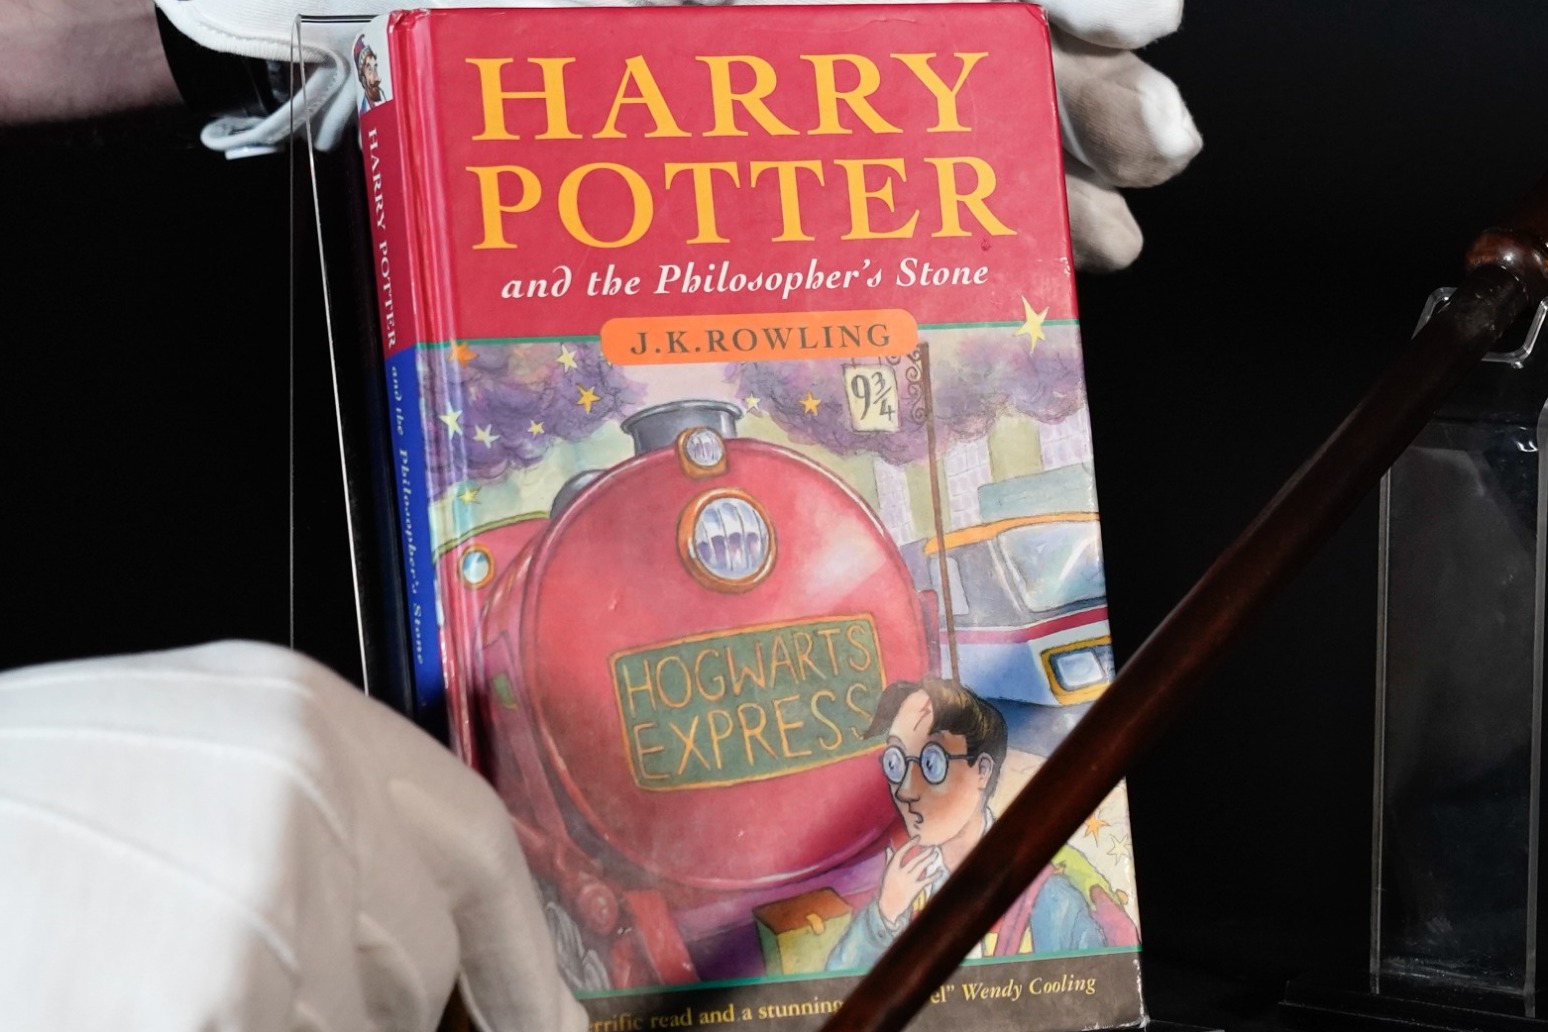 Harry Potter fans listen to Audible audiobooks for one billion hours 